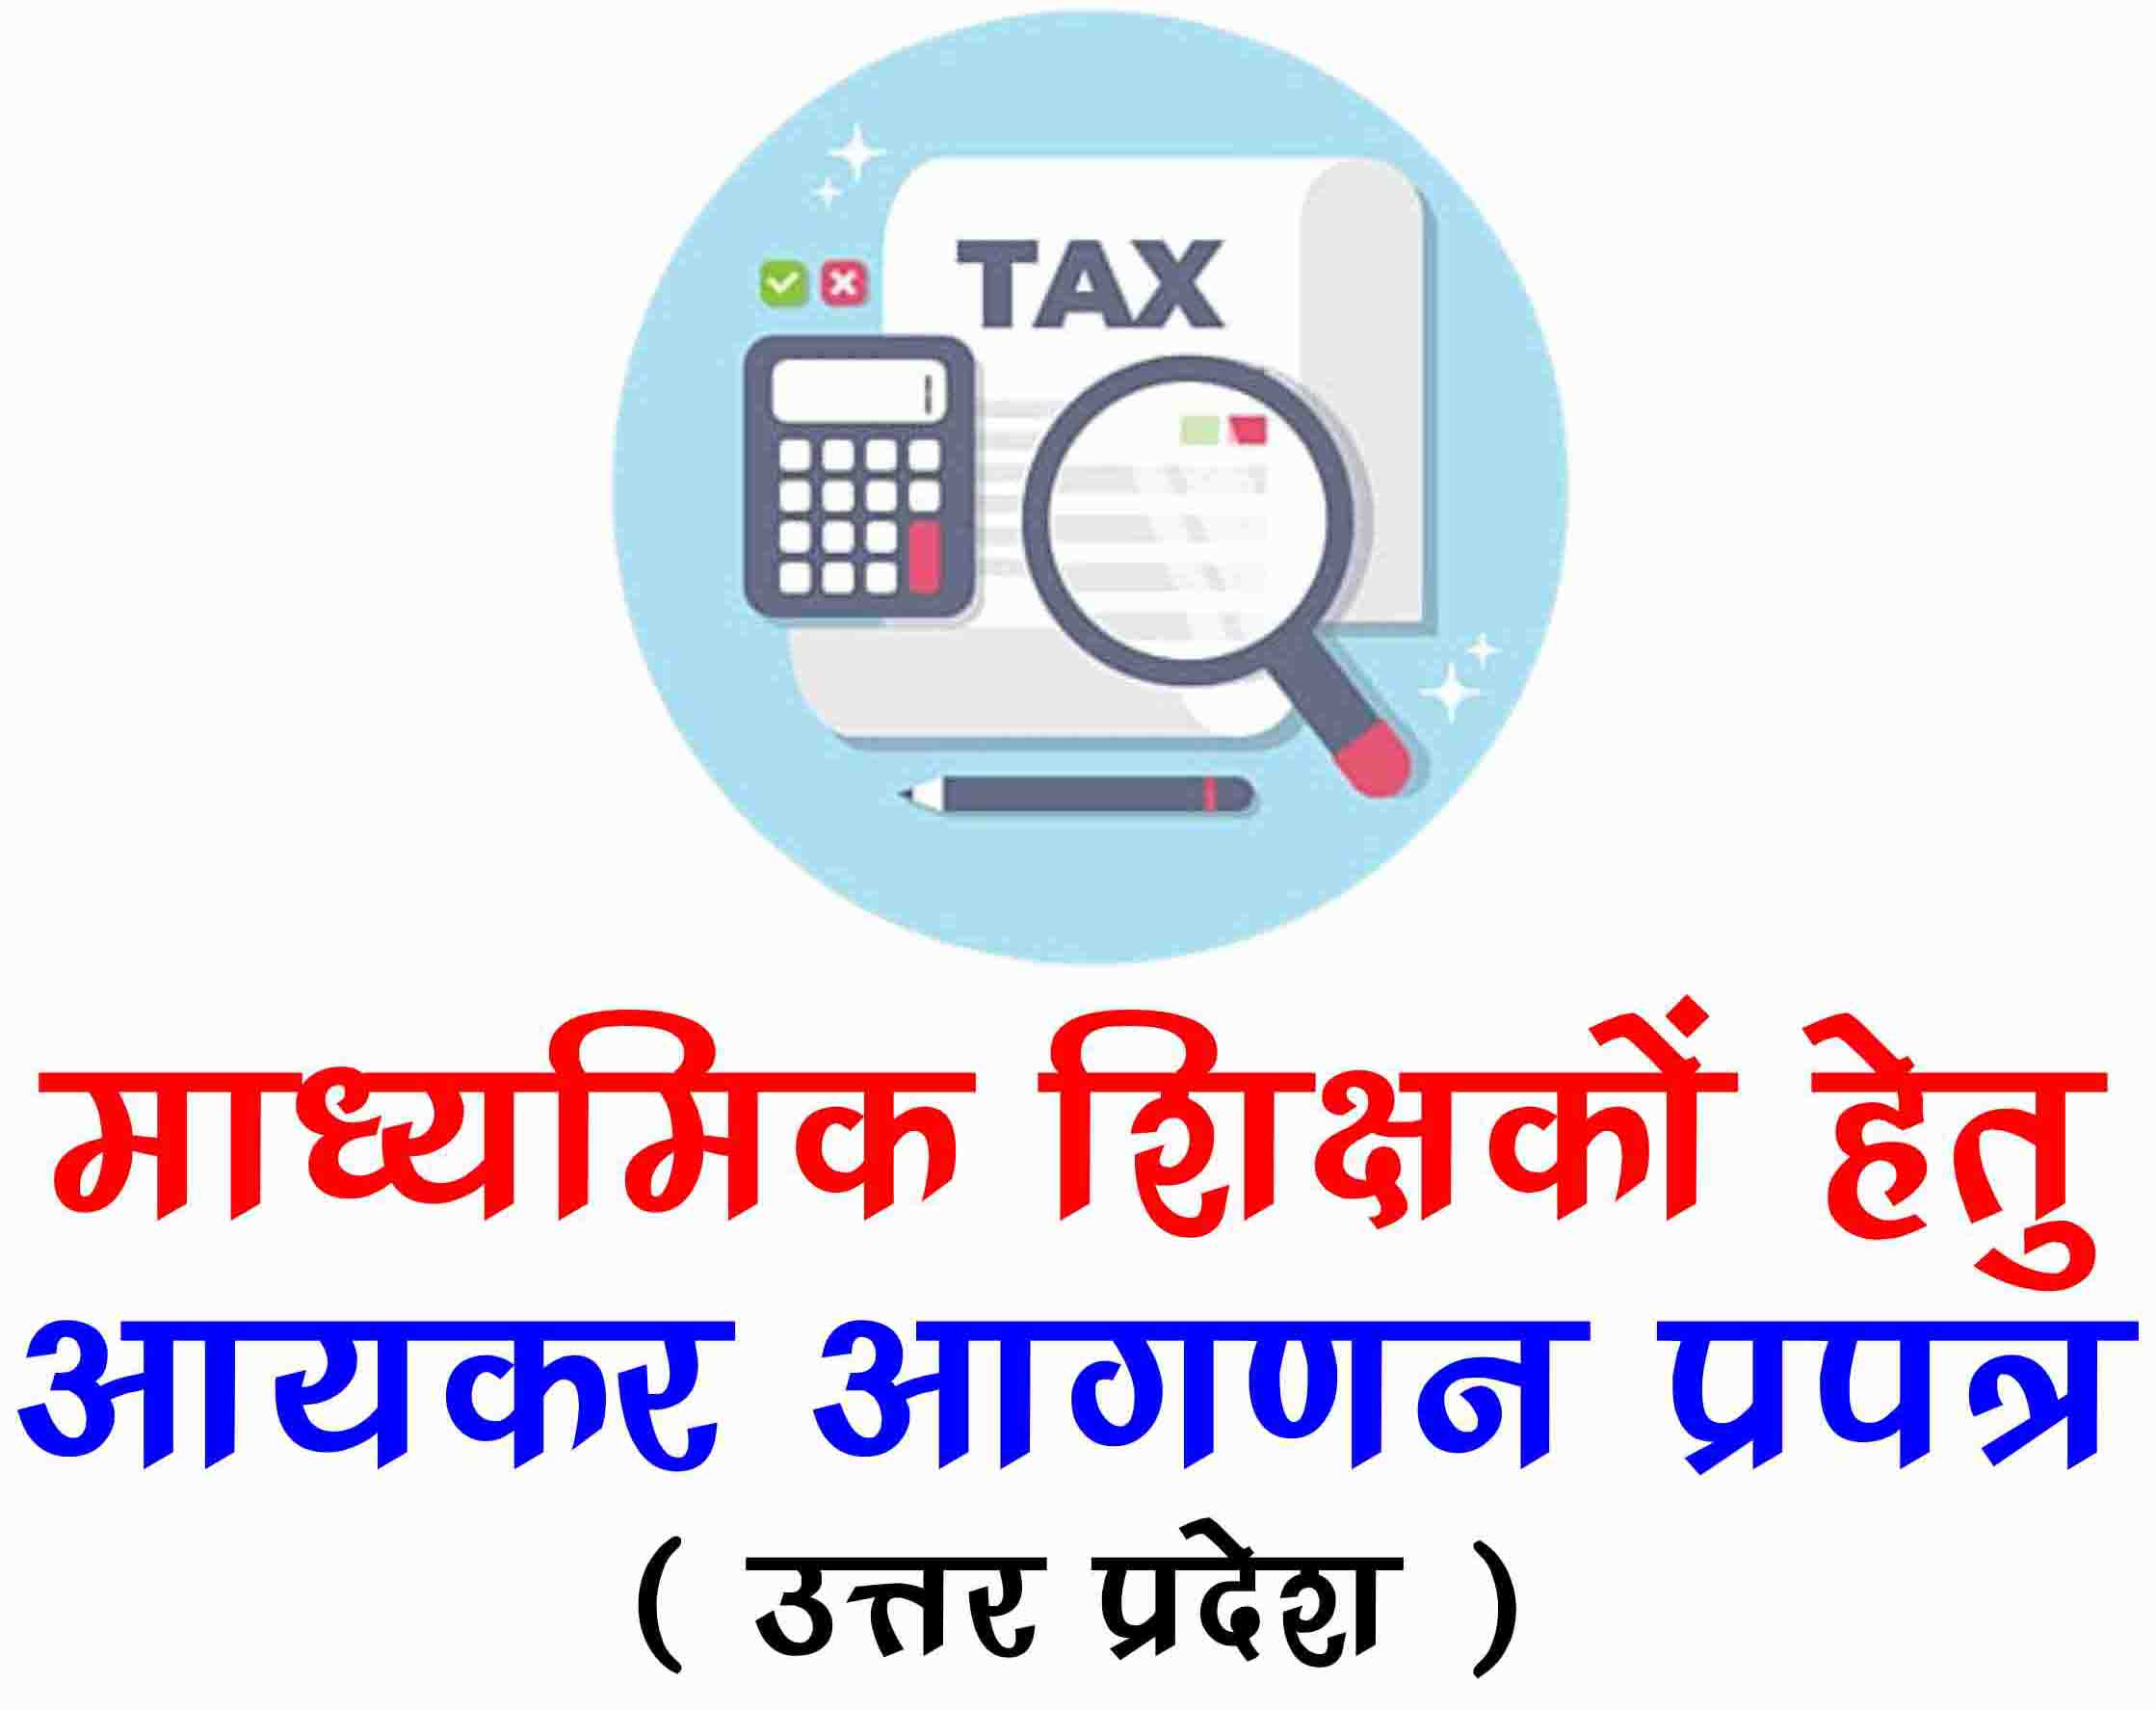 माध्यमिक शिक्षकों हेतु आयकर आगणन प्रपत्र || Income Tax Aganan Prapatra Uttar Pradesh Madhyamik Shiksha Parishad Teachers | UP TGT PGT Teacher Income Tax Aganan Prapatra